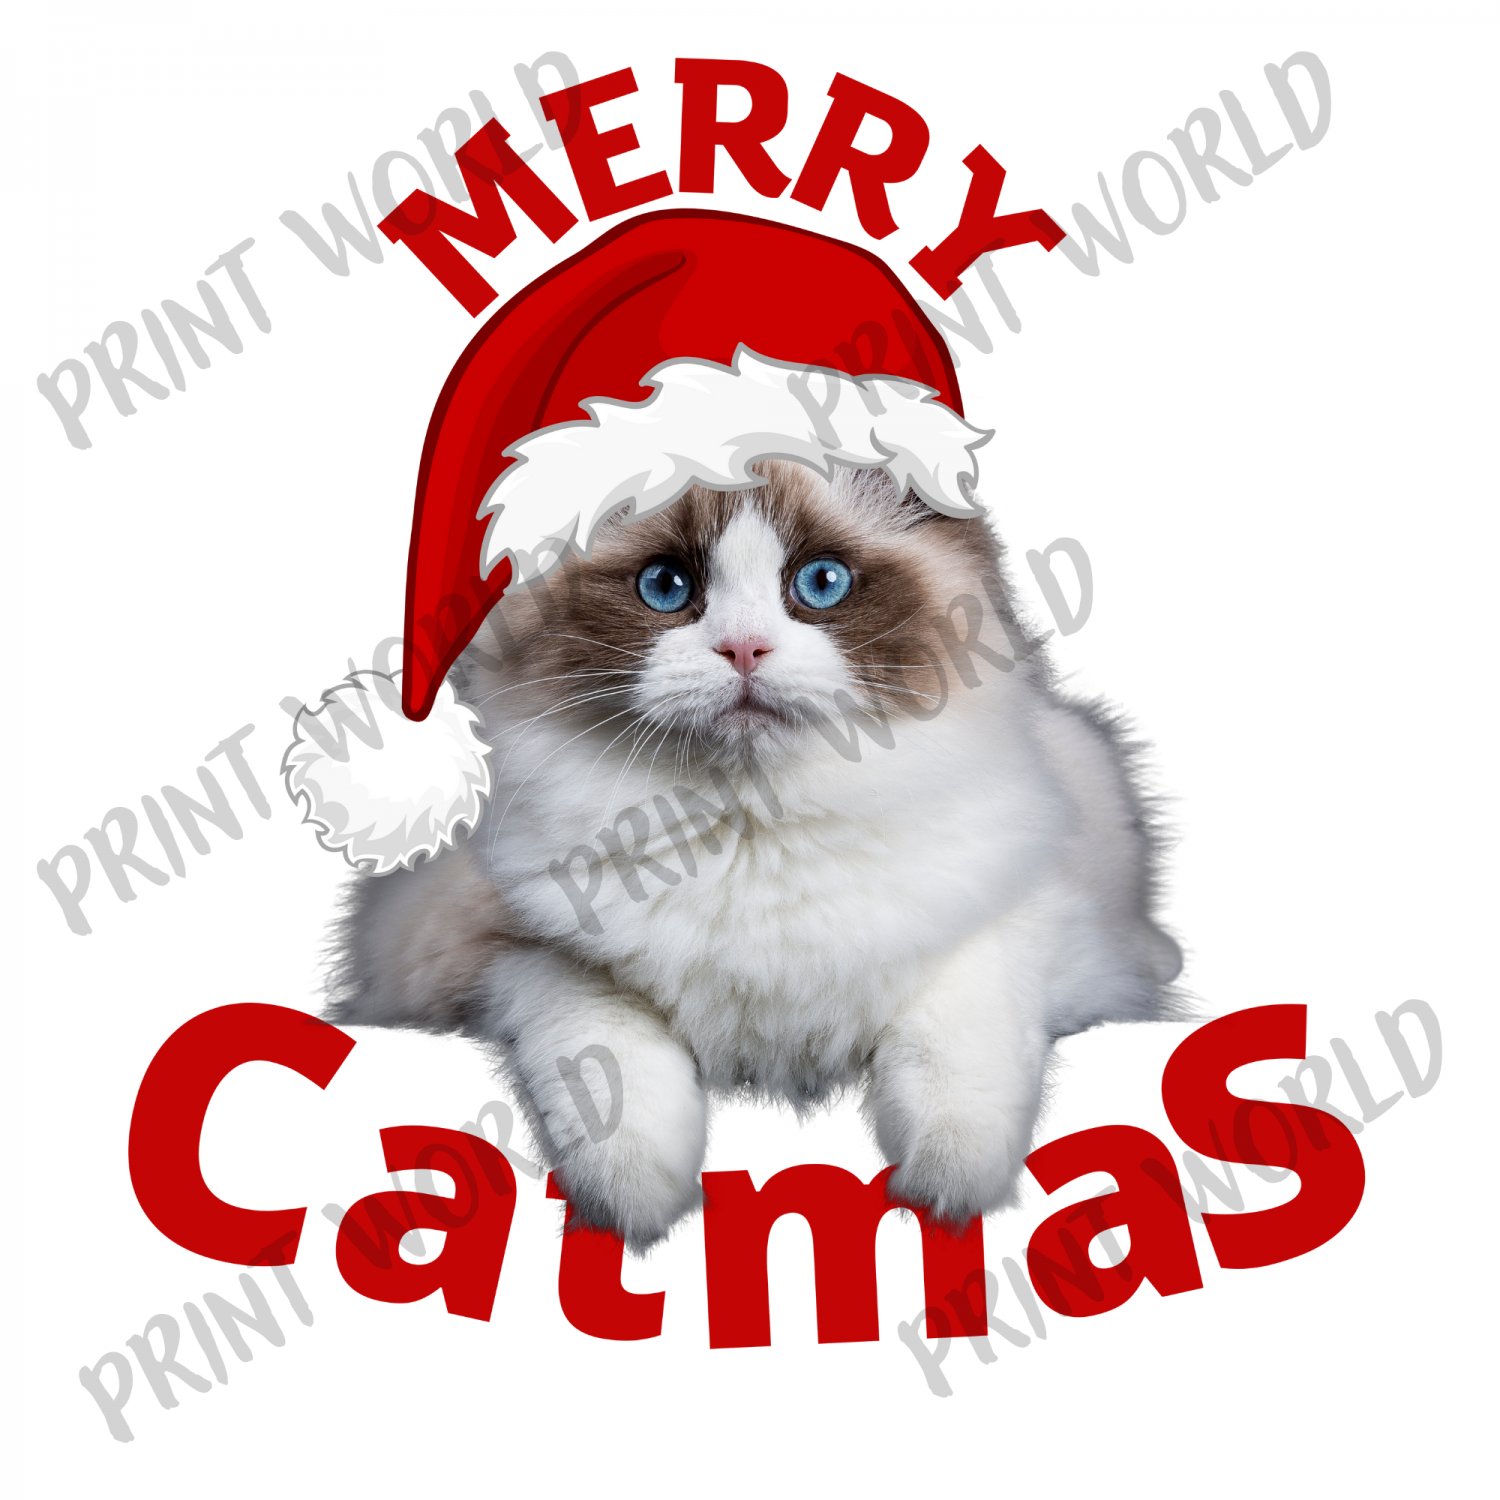 Merry Catmas Cute Cat Christmas Design digital download PNG file.